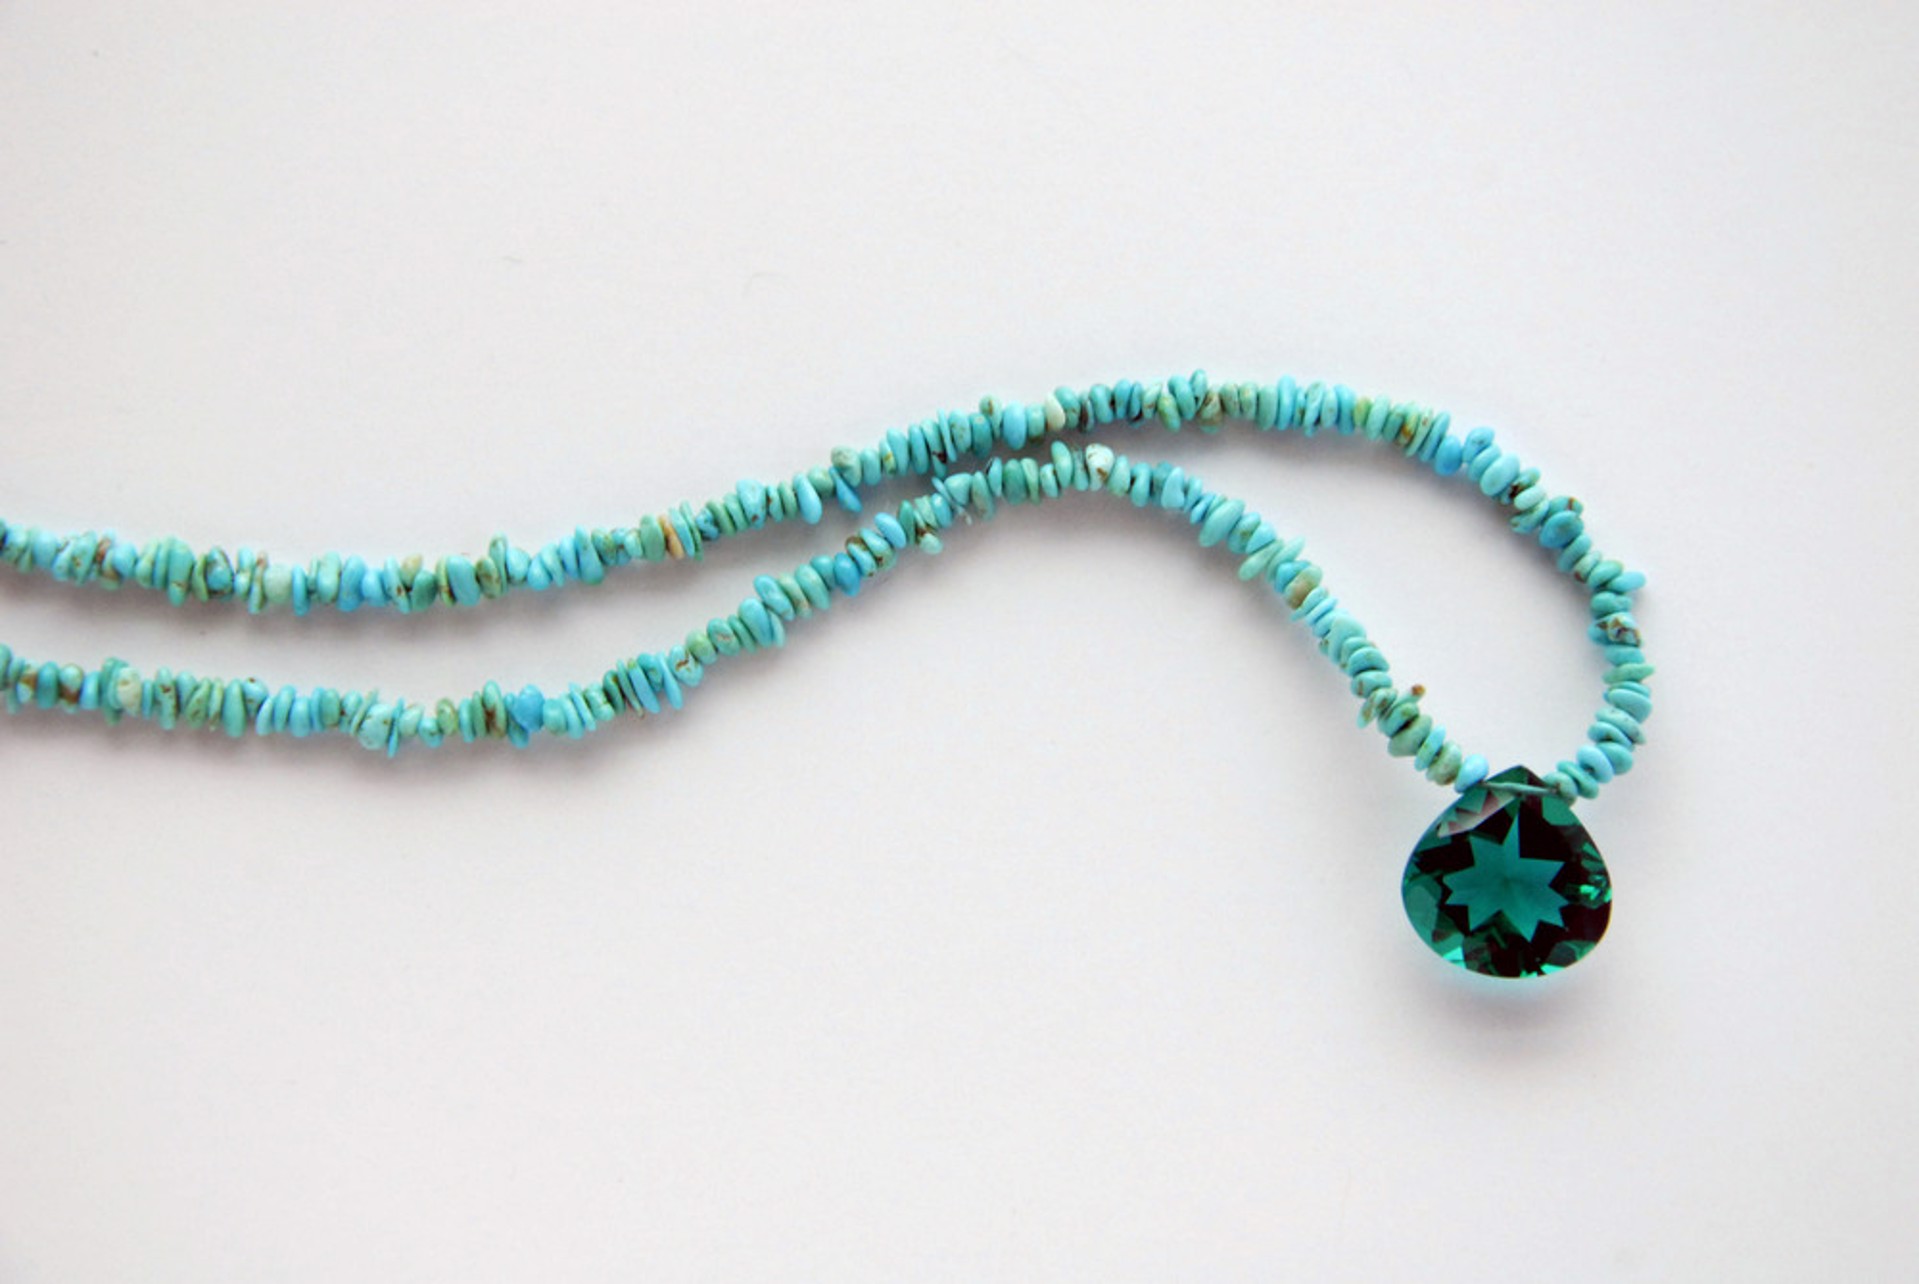 Turquoise Necklace, quartz pendant by Nance Trueworthy